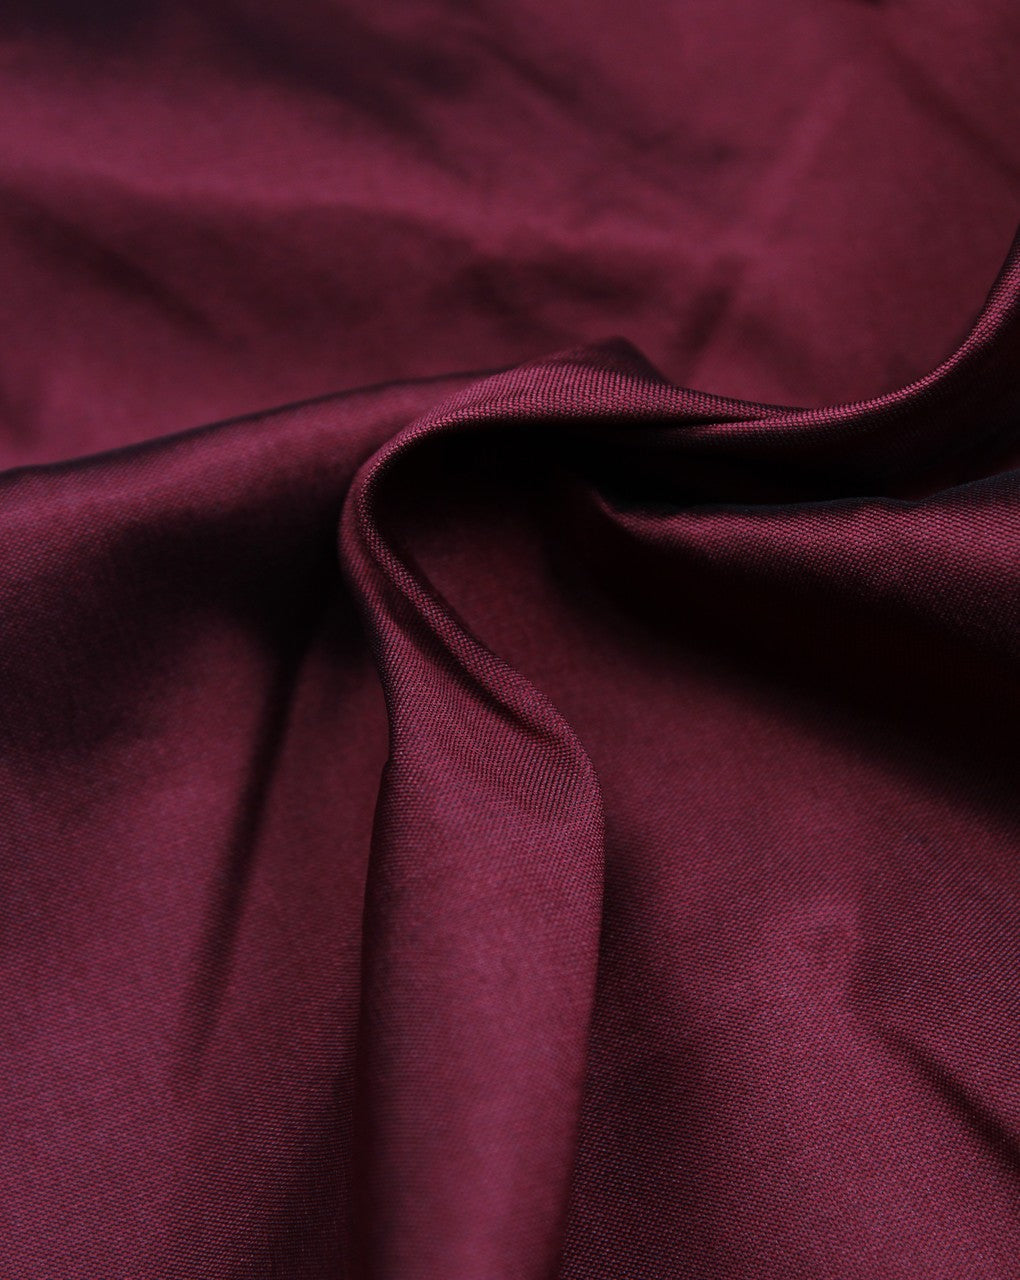 Plain Maroon Polyester Taffeta Fabric